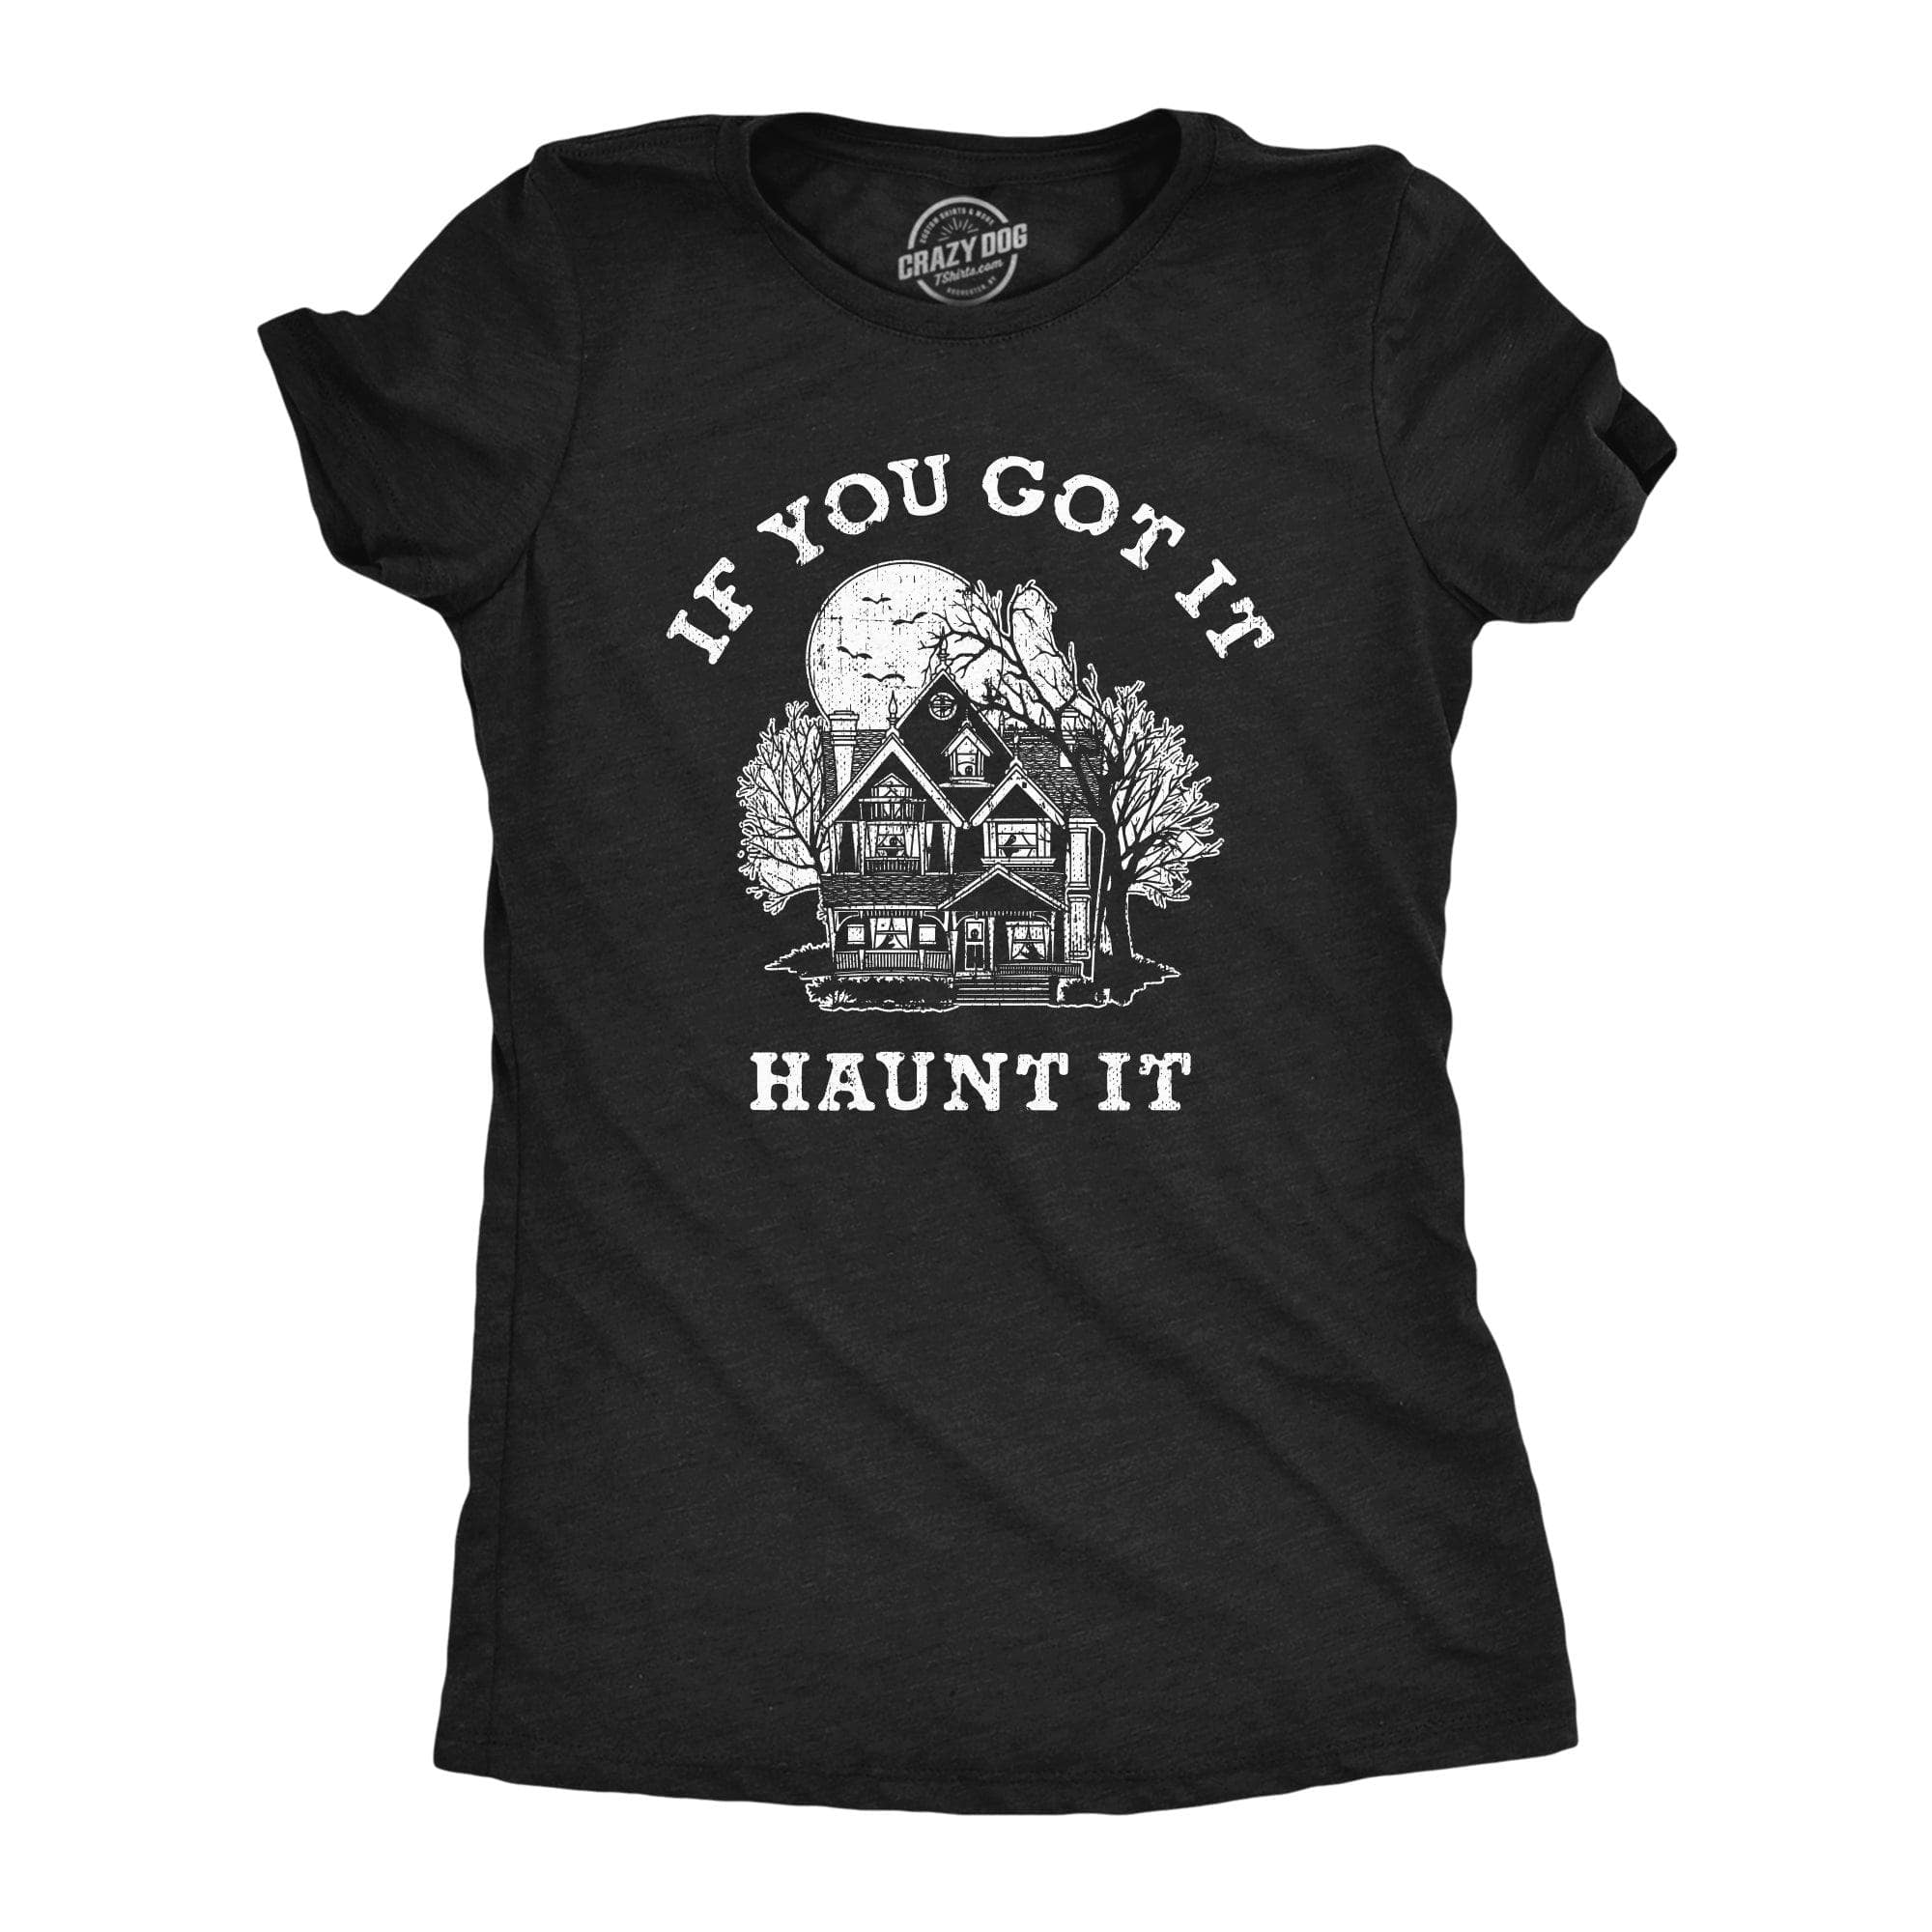 If You Got It Haunt It Women's Tshirt  -  Crazy Dog T-Shirts